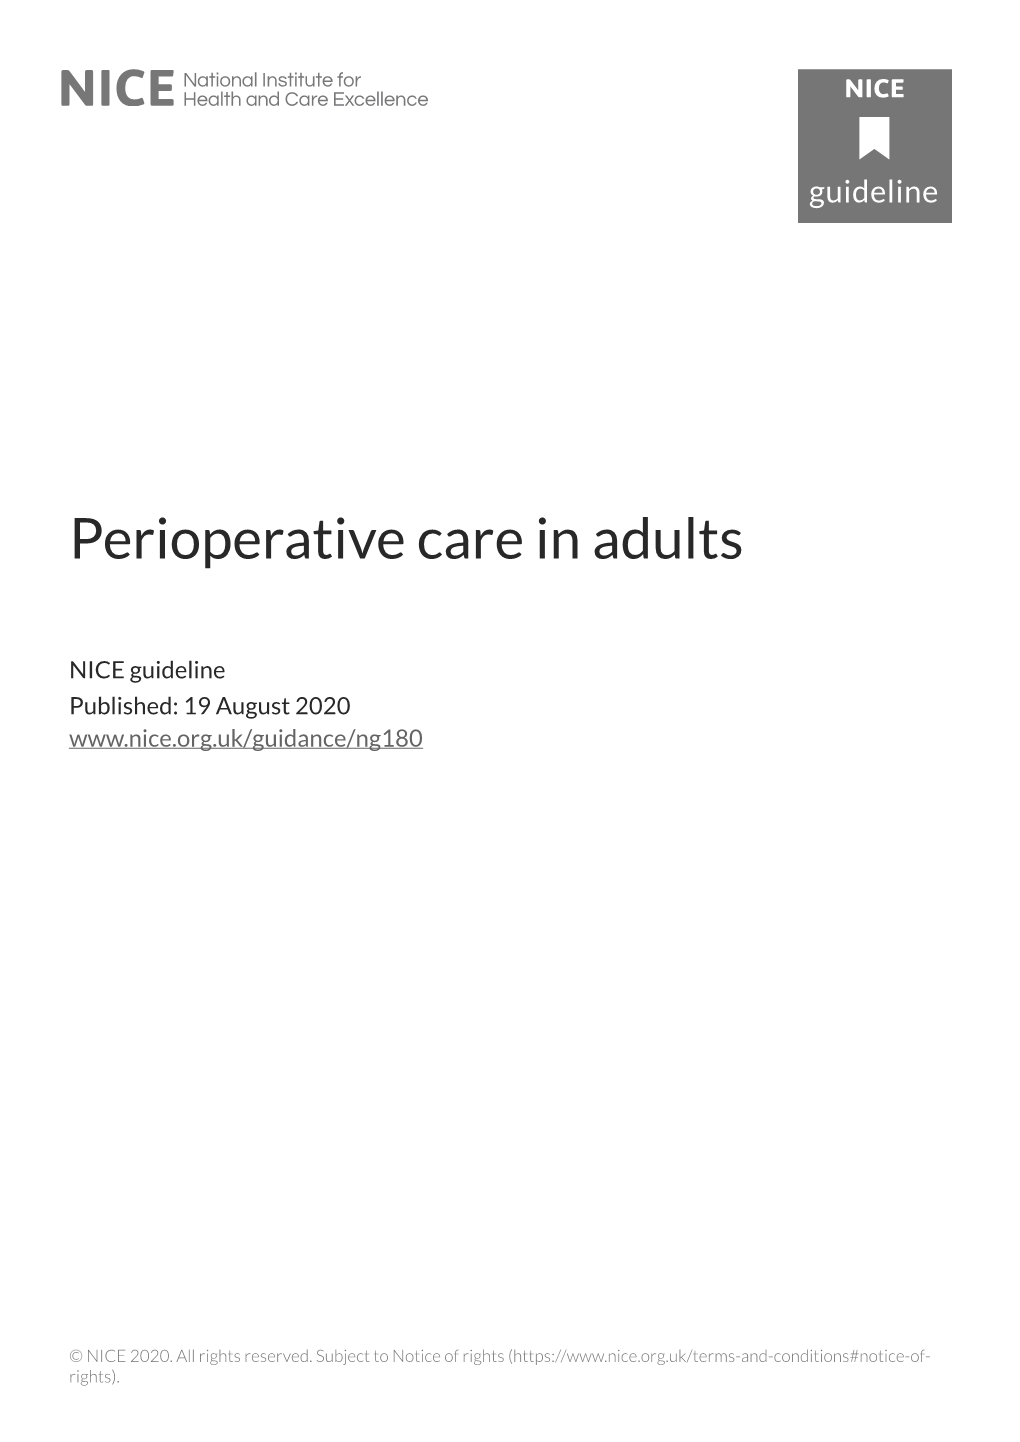 Perioperative Care in Adults